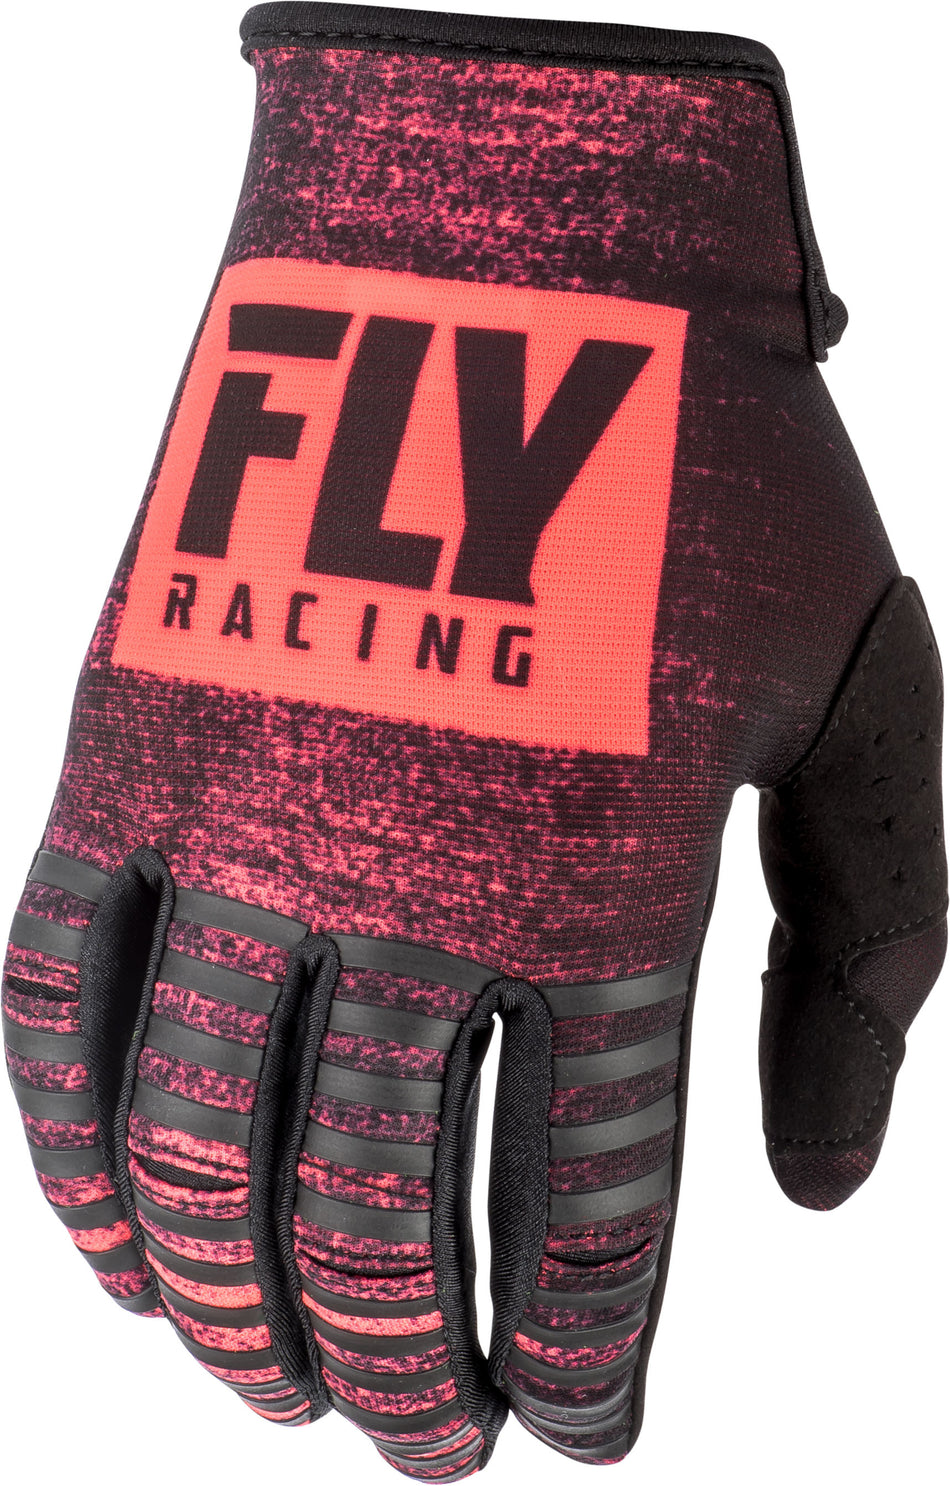 FLY RACING Kinetic Noiz Gloves Neon Red/Black Sz 08 372-51208